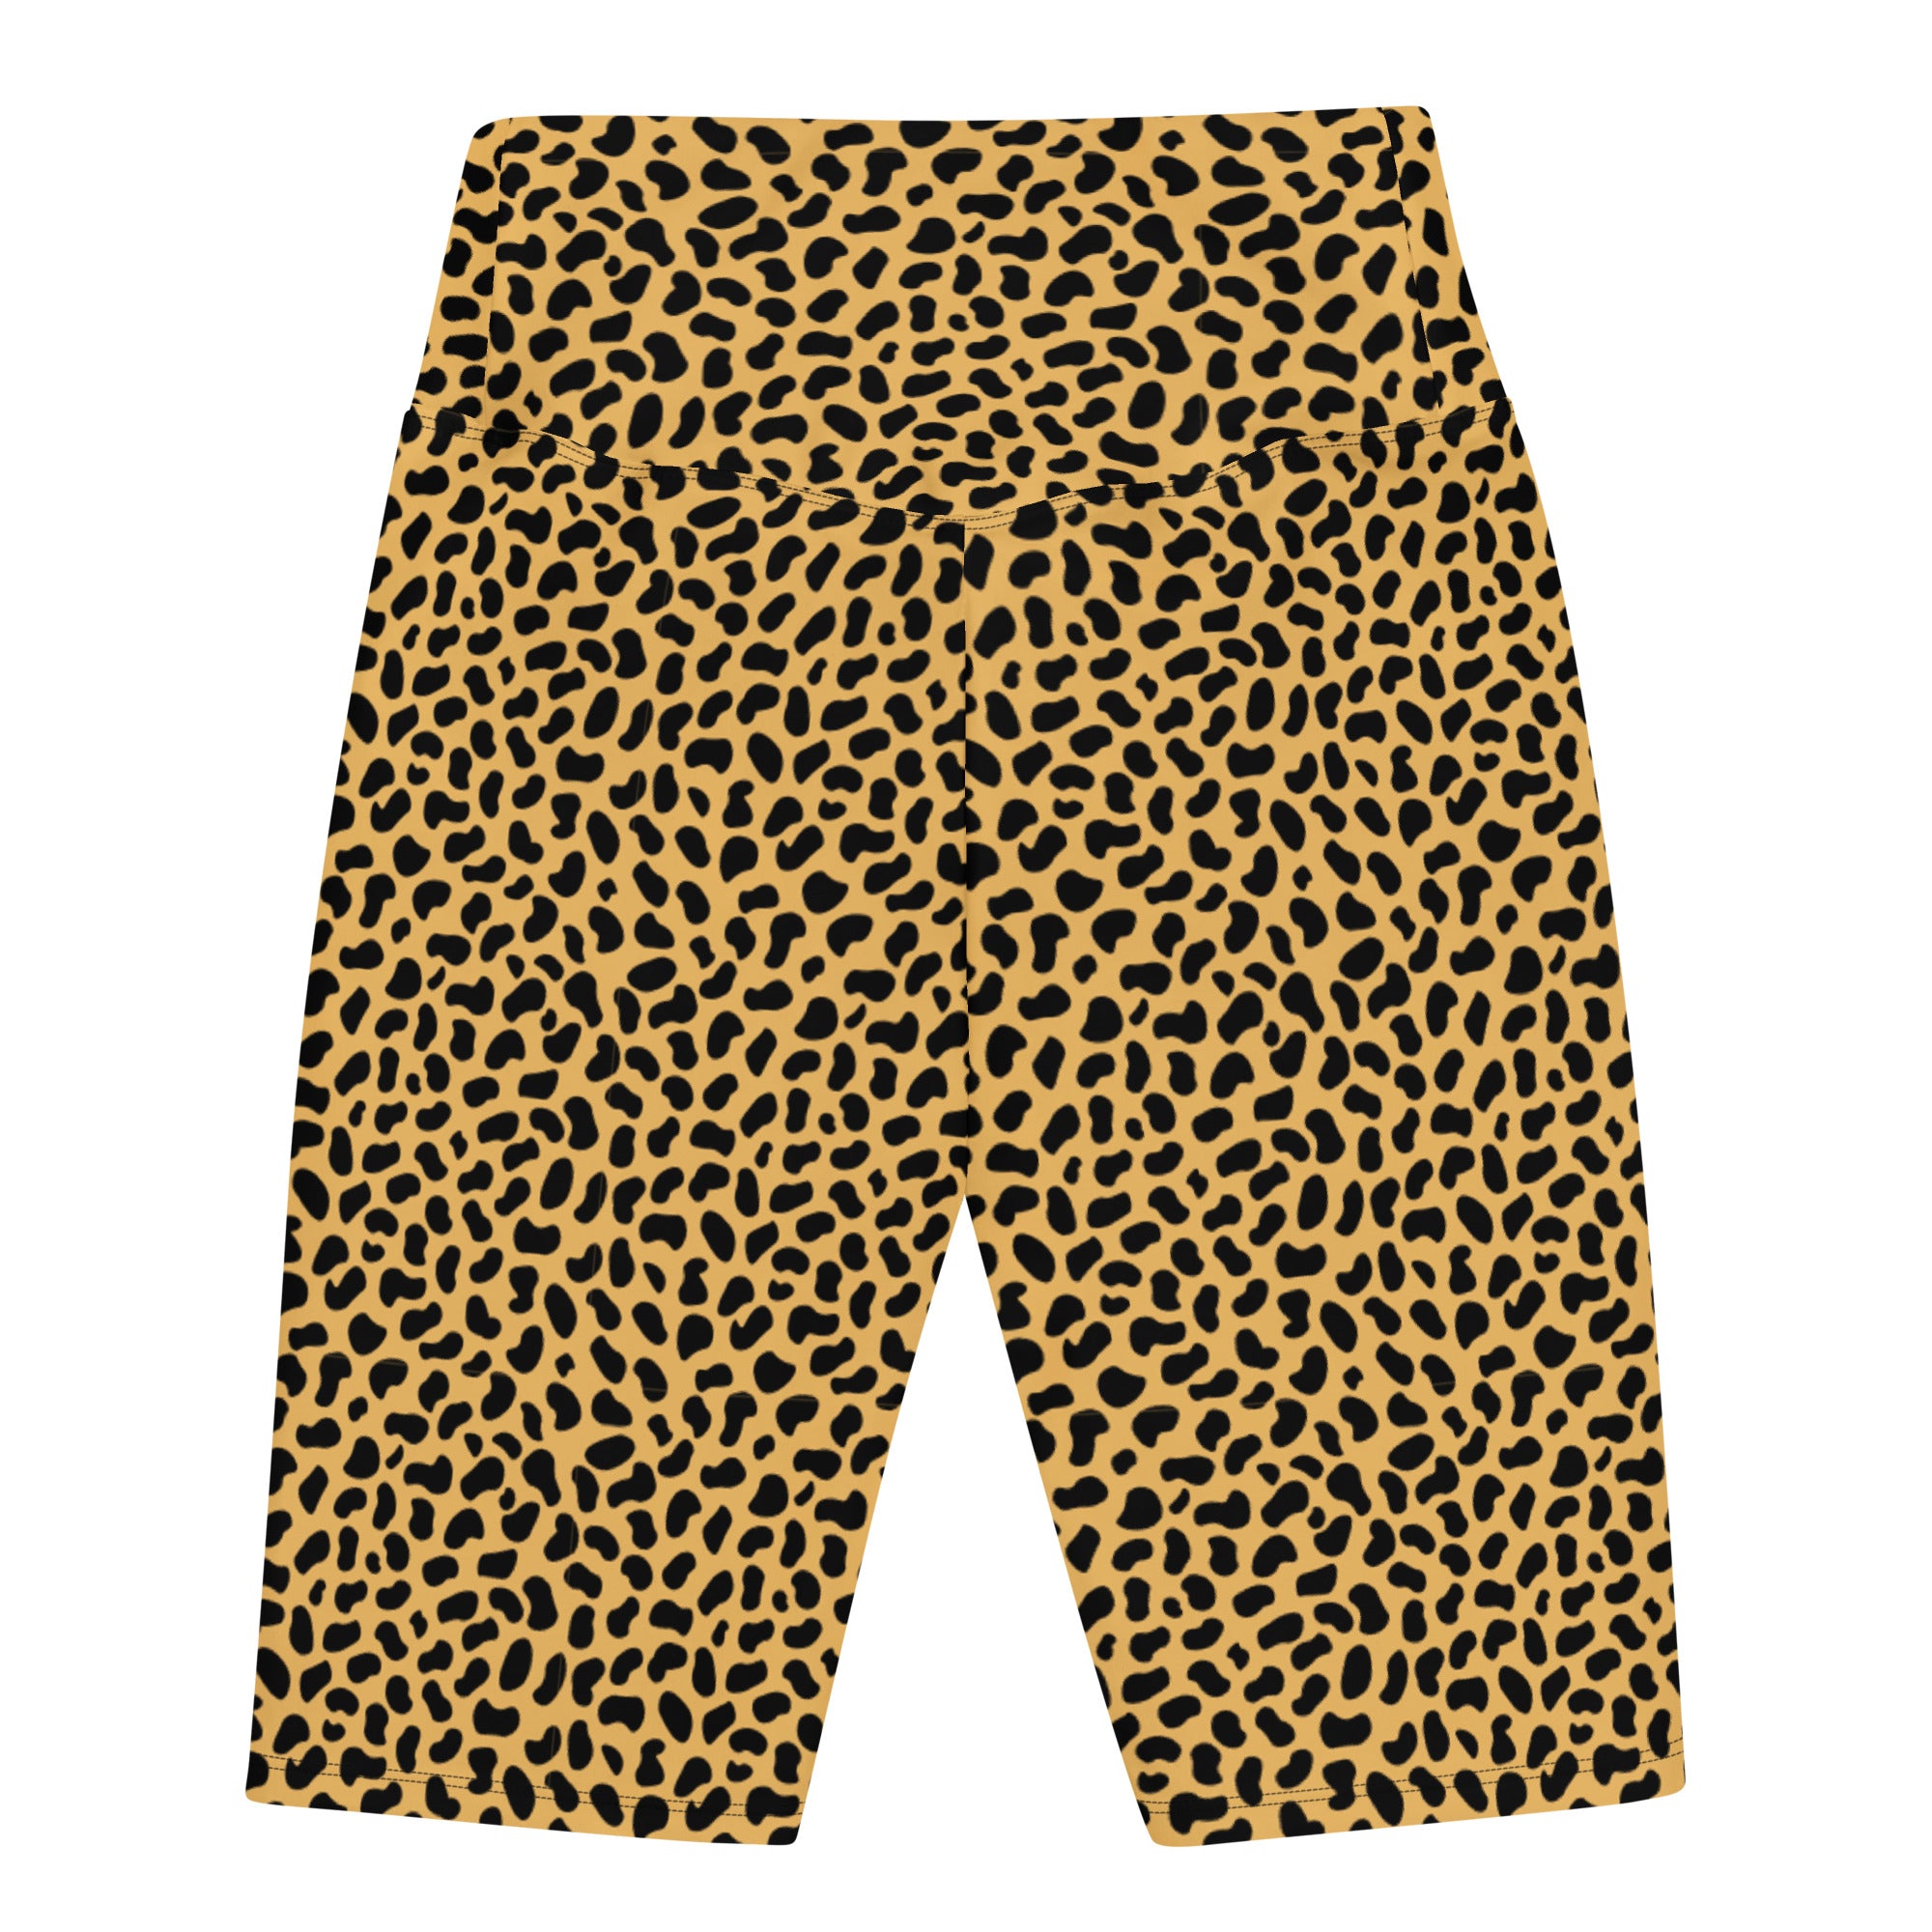 WMNS Cheetah Print Biker Shorts